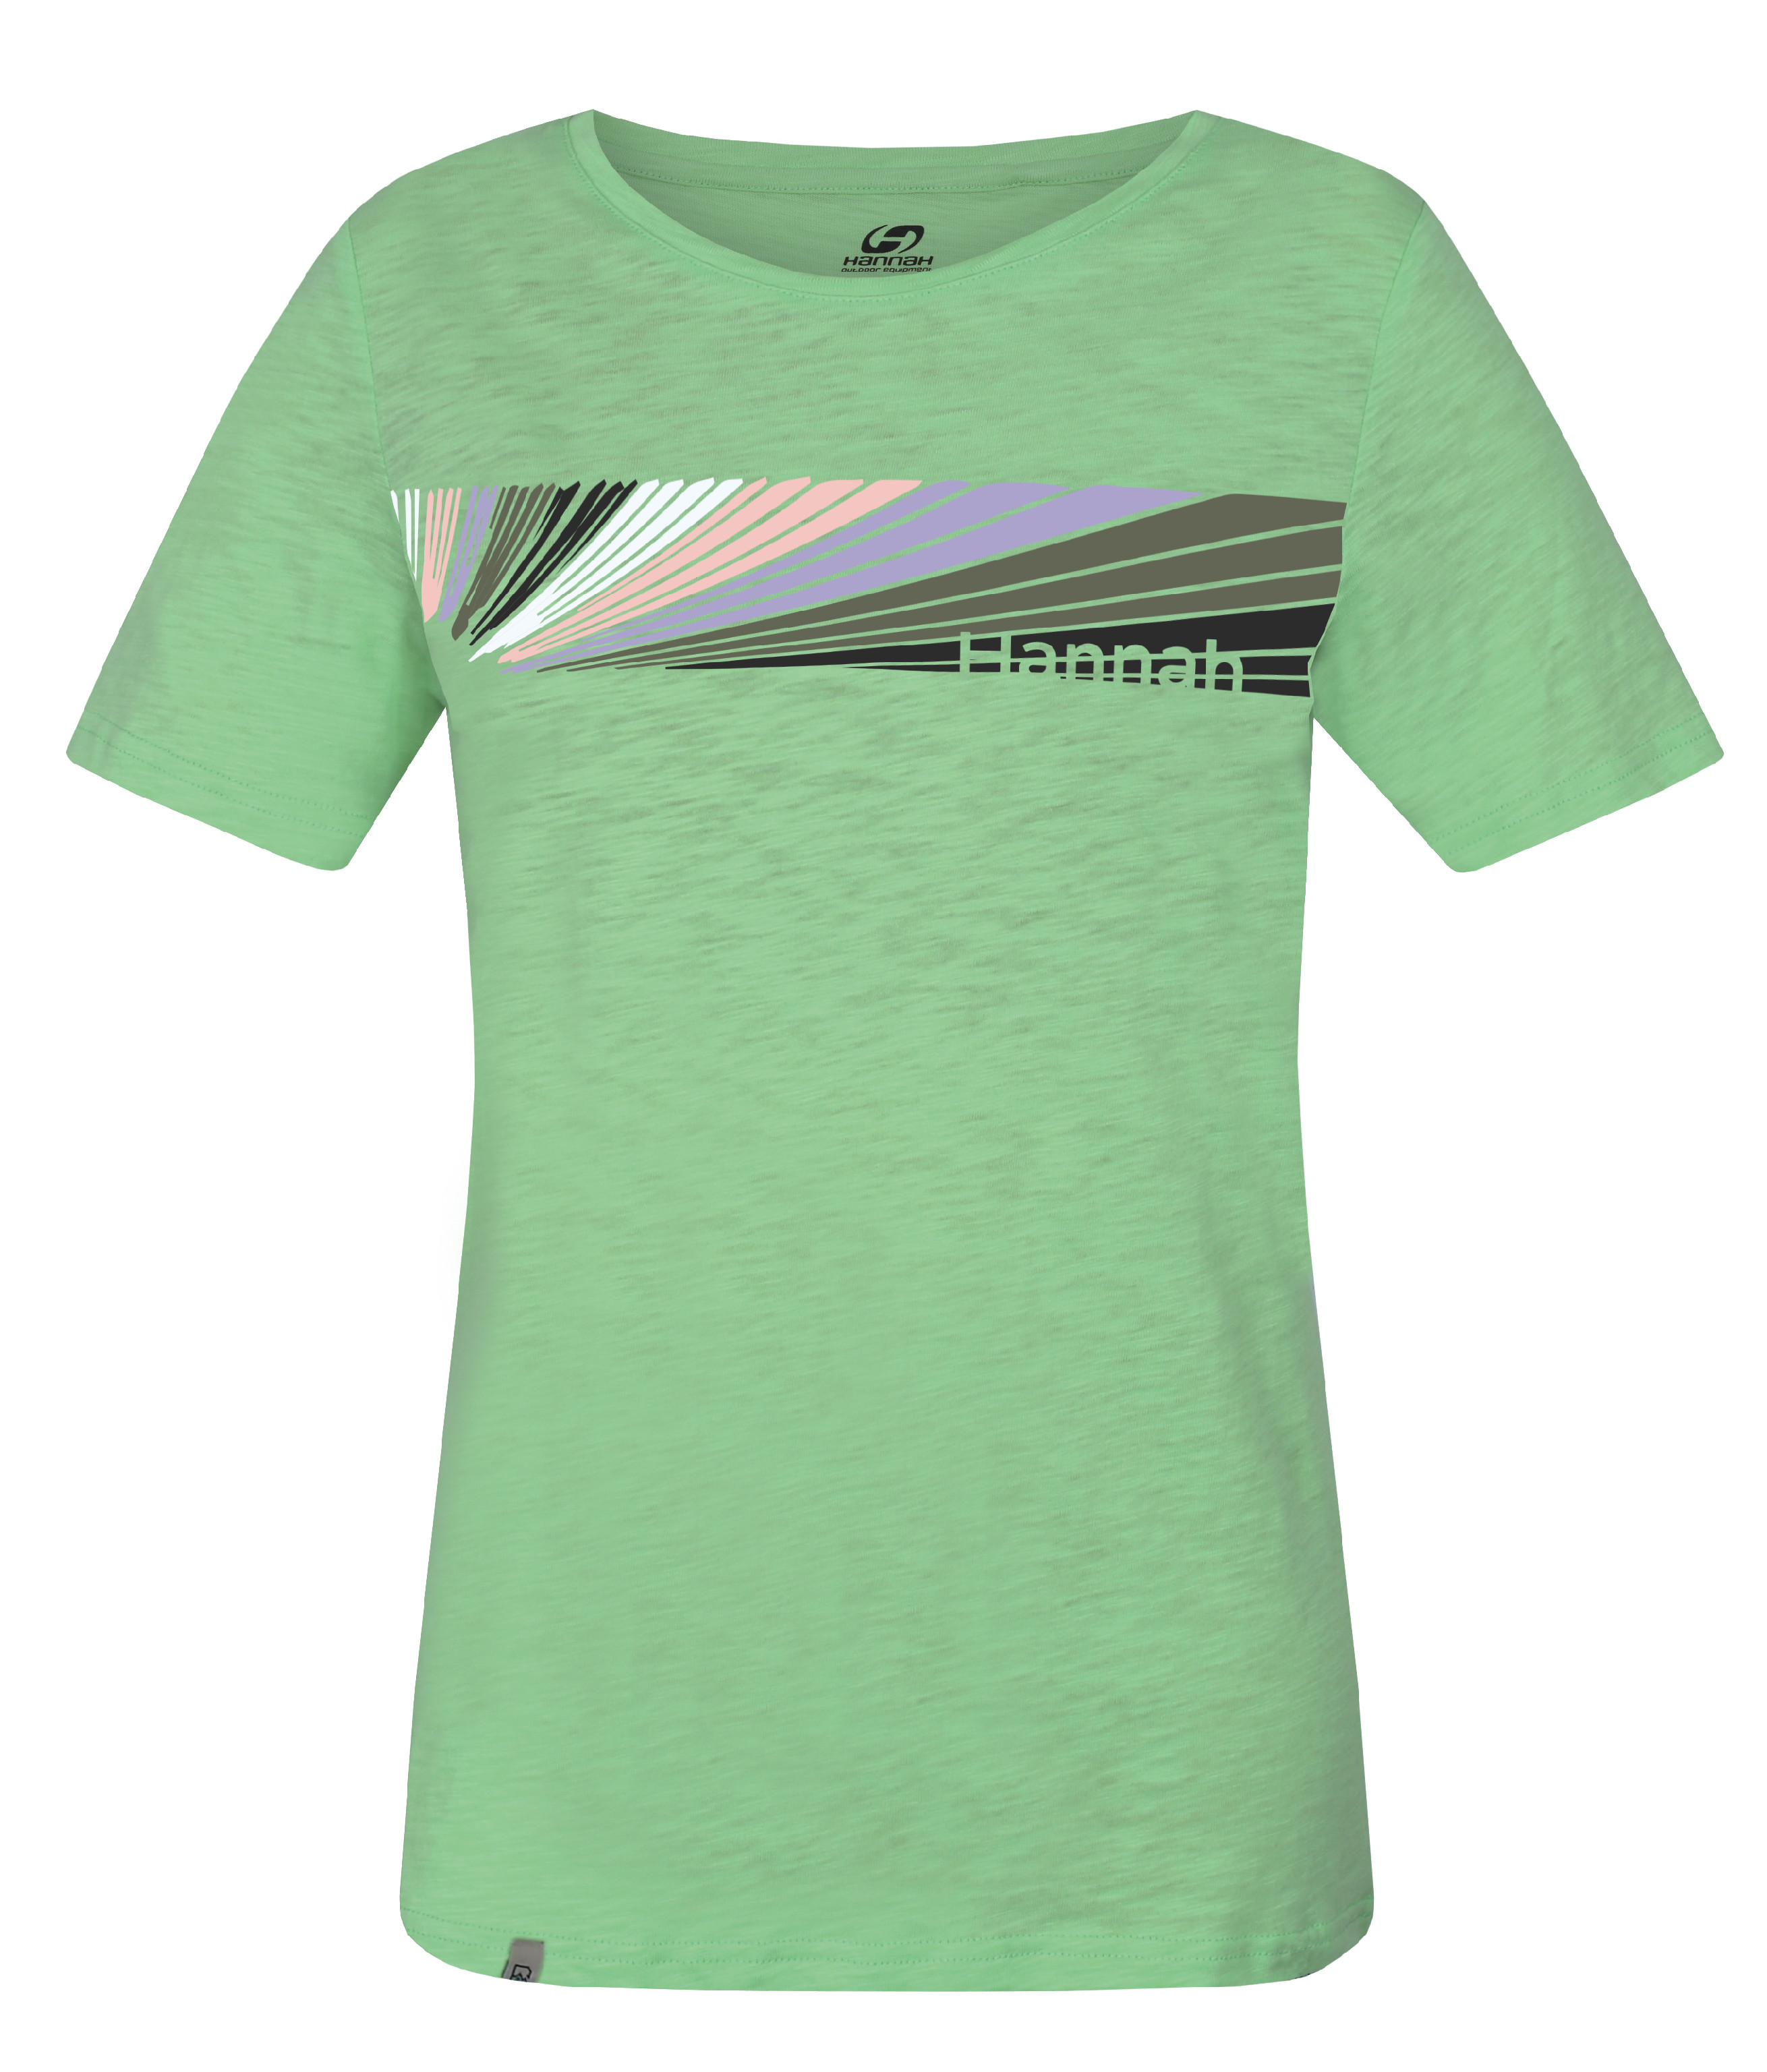 Hannah KATANA paradise green Velikost: 36 dámské tričko s krátkým rukávem